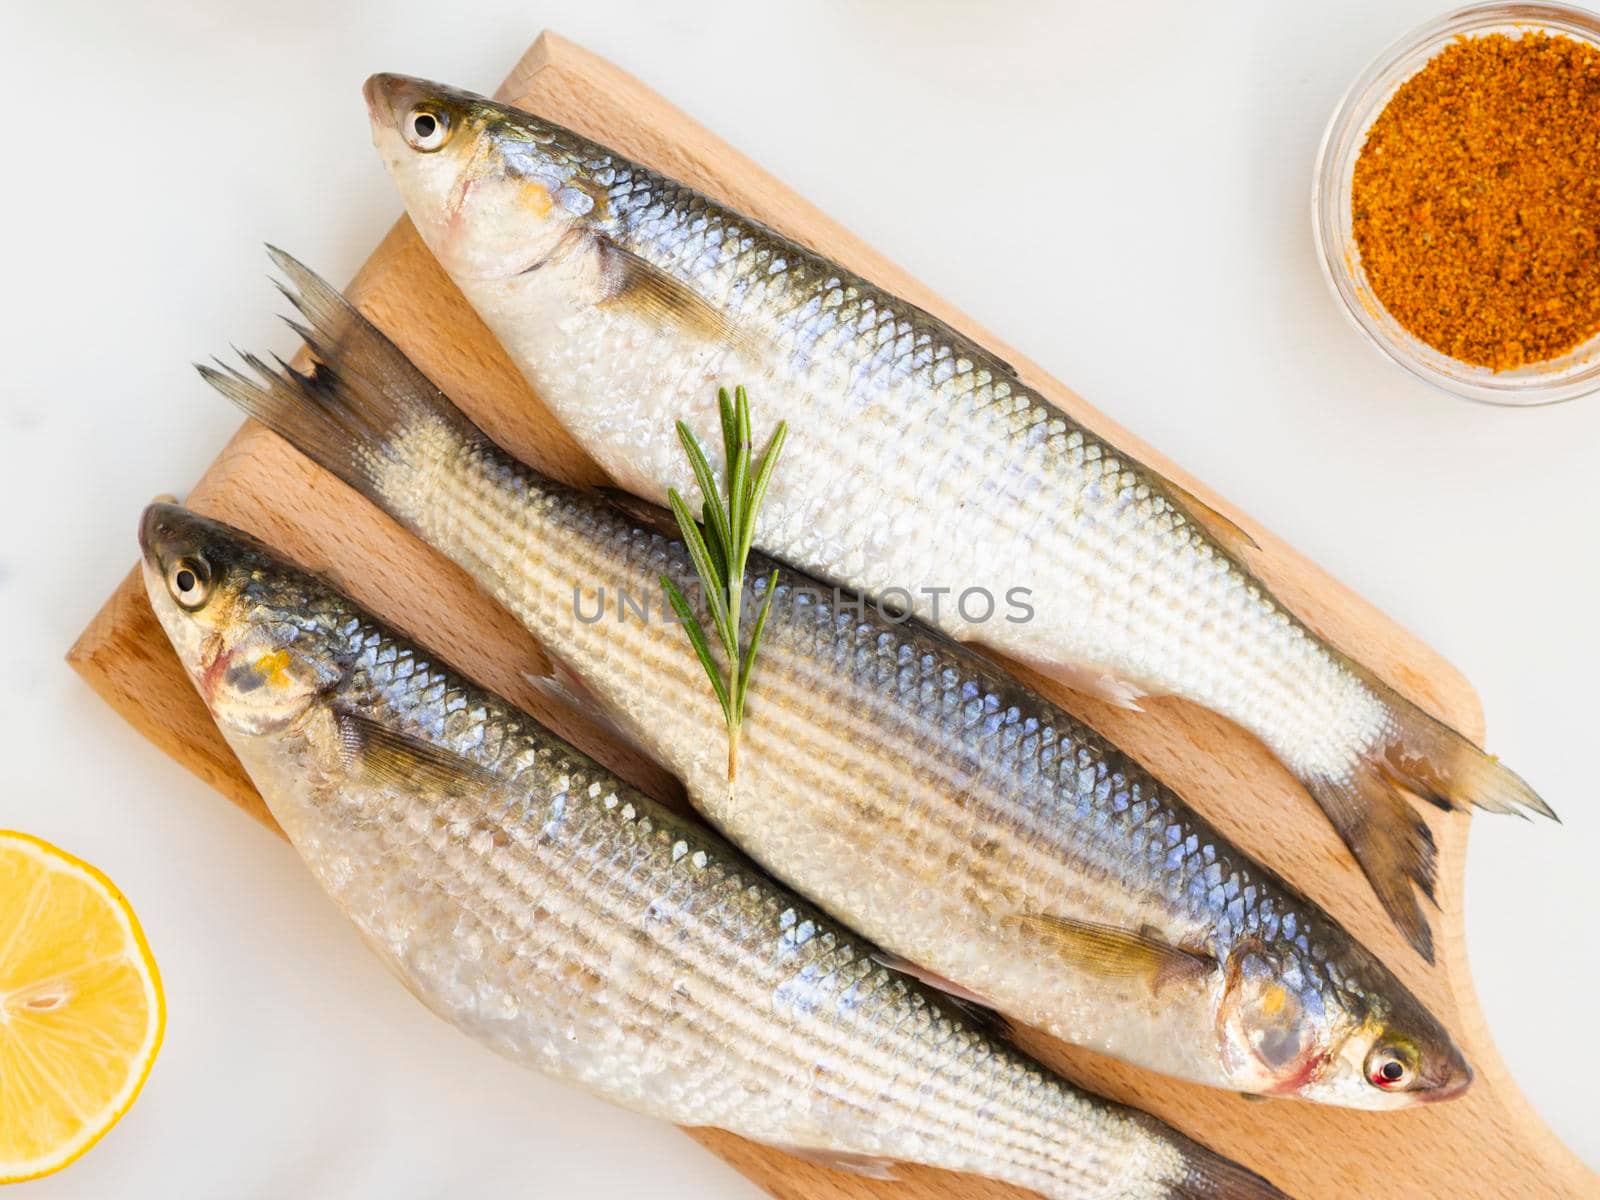 three fresh fish wooden bottom with condiments by Zahard